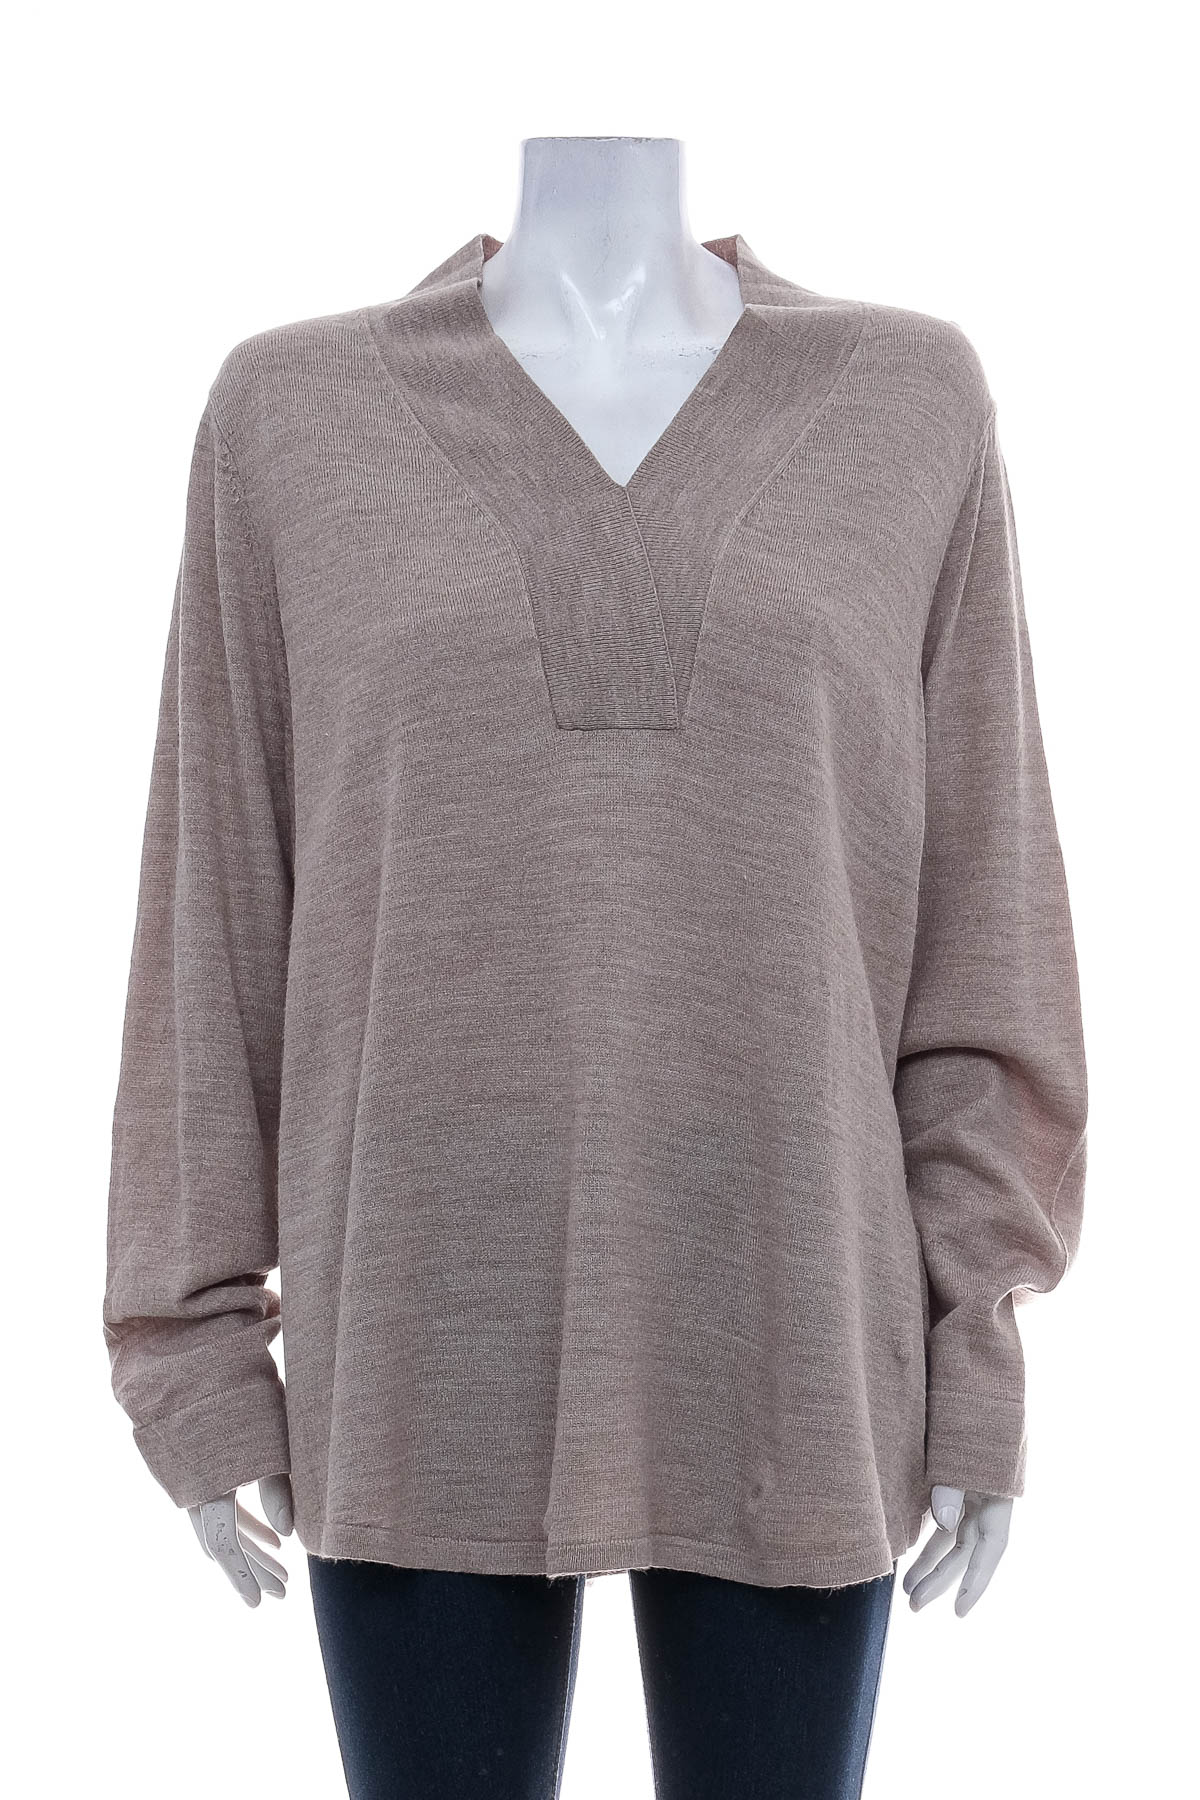 Women's sweater - Isaac Mizrahi - 0